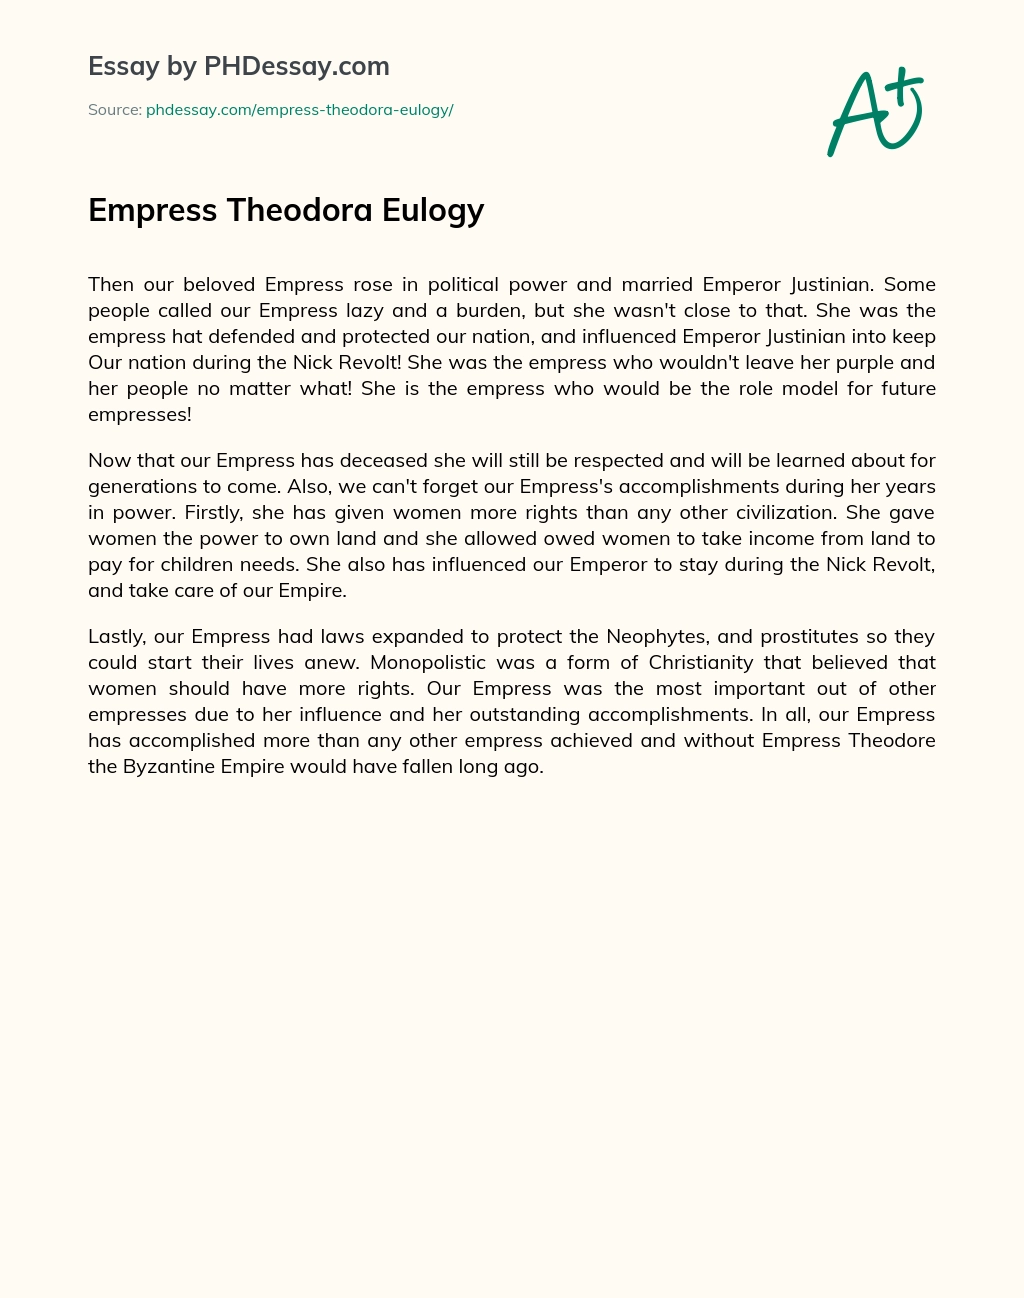 Empress Theodora Eulogy essay